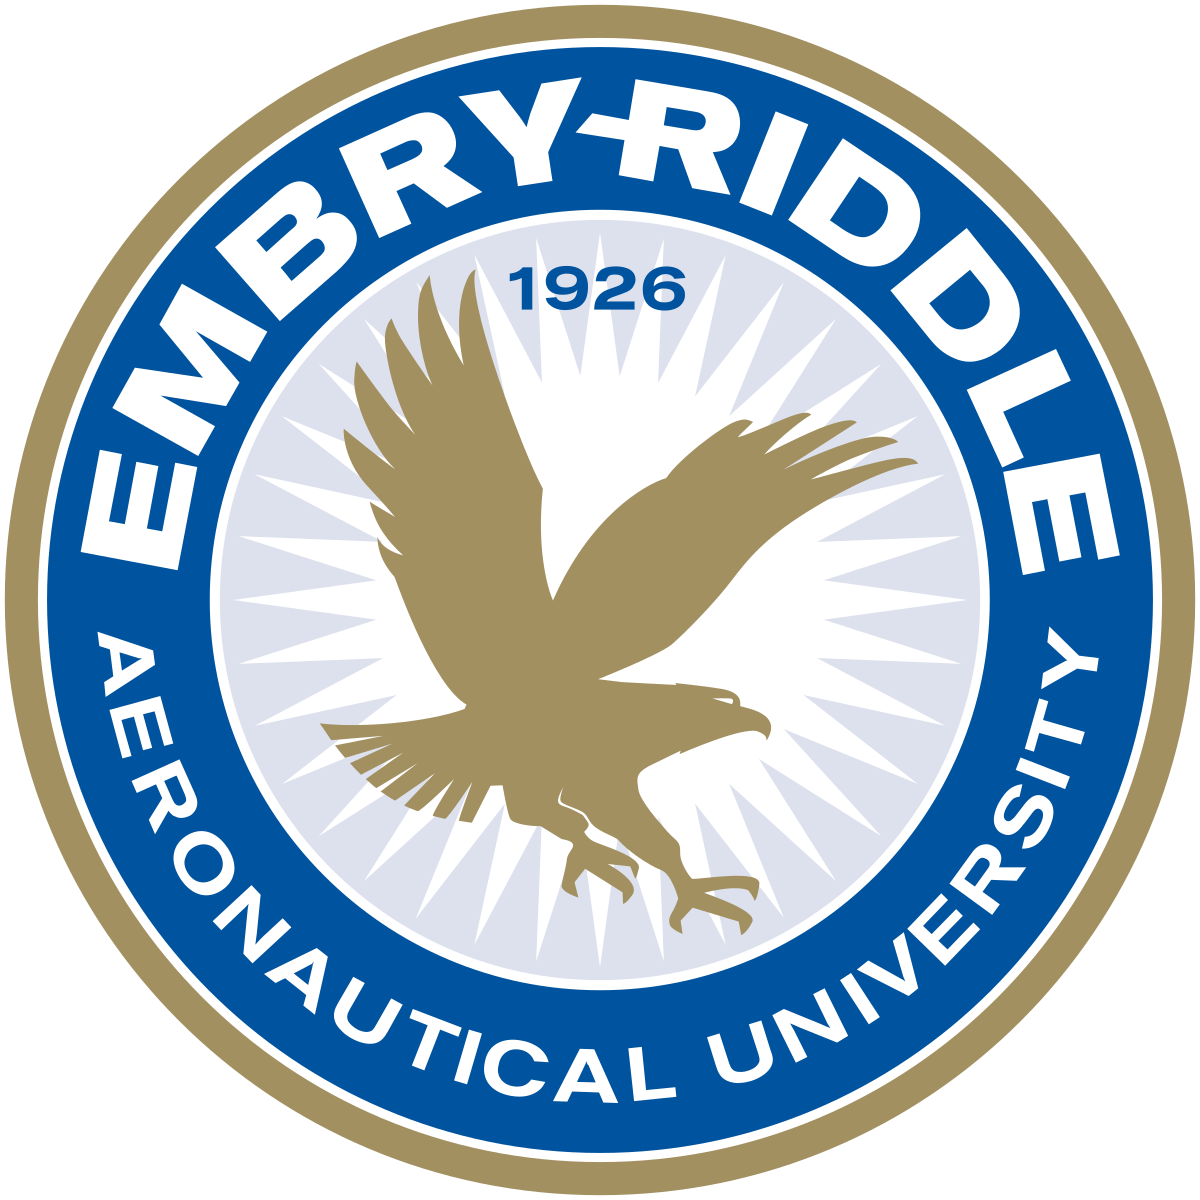 Embry-Riddle_Aeronautical_University_seal.svg